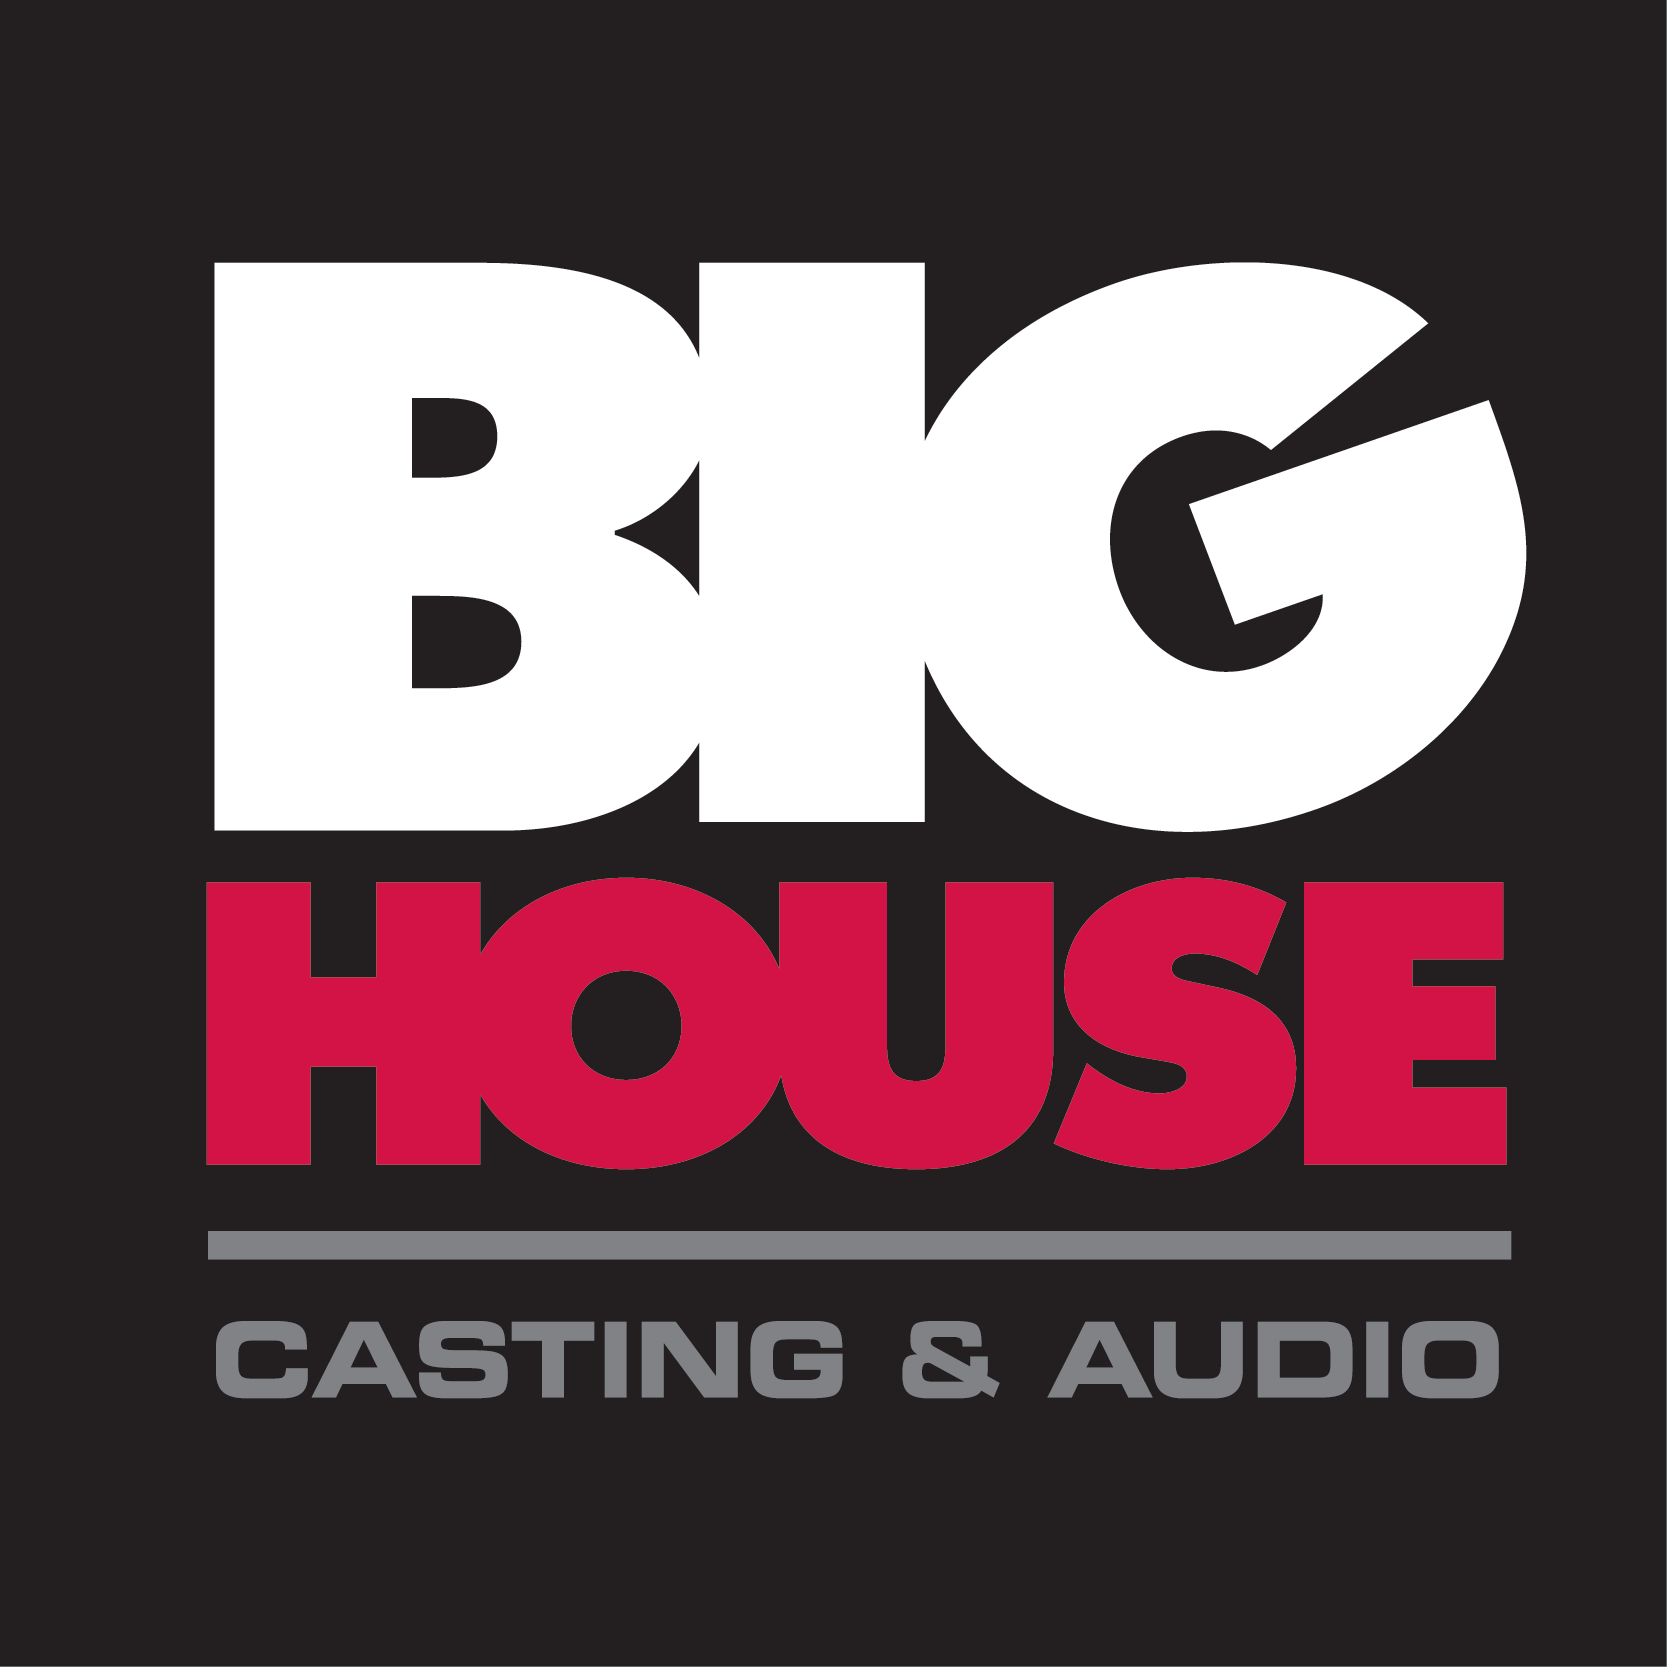 Big House Casting & Audio